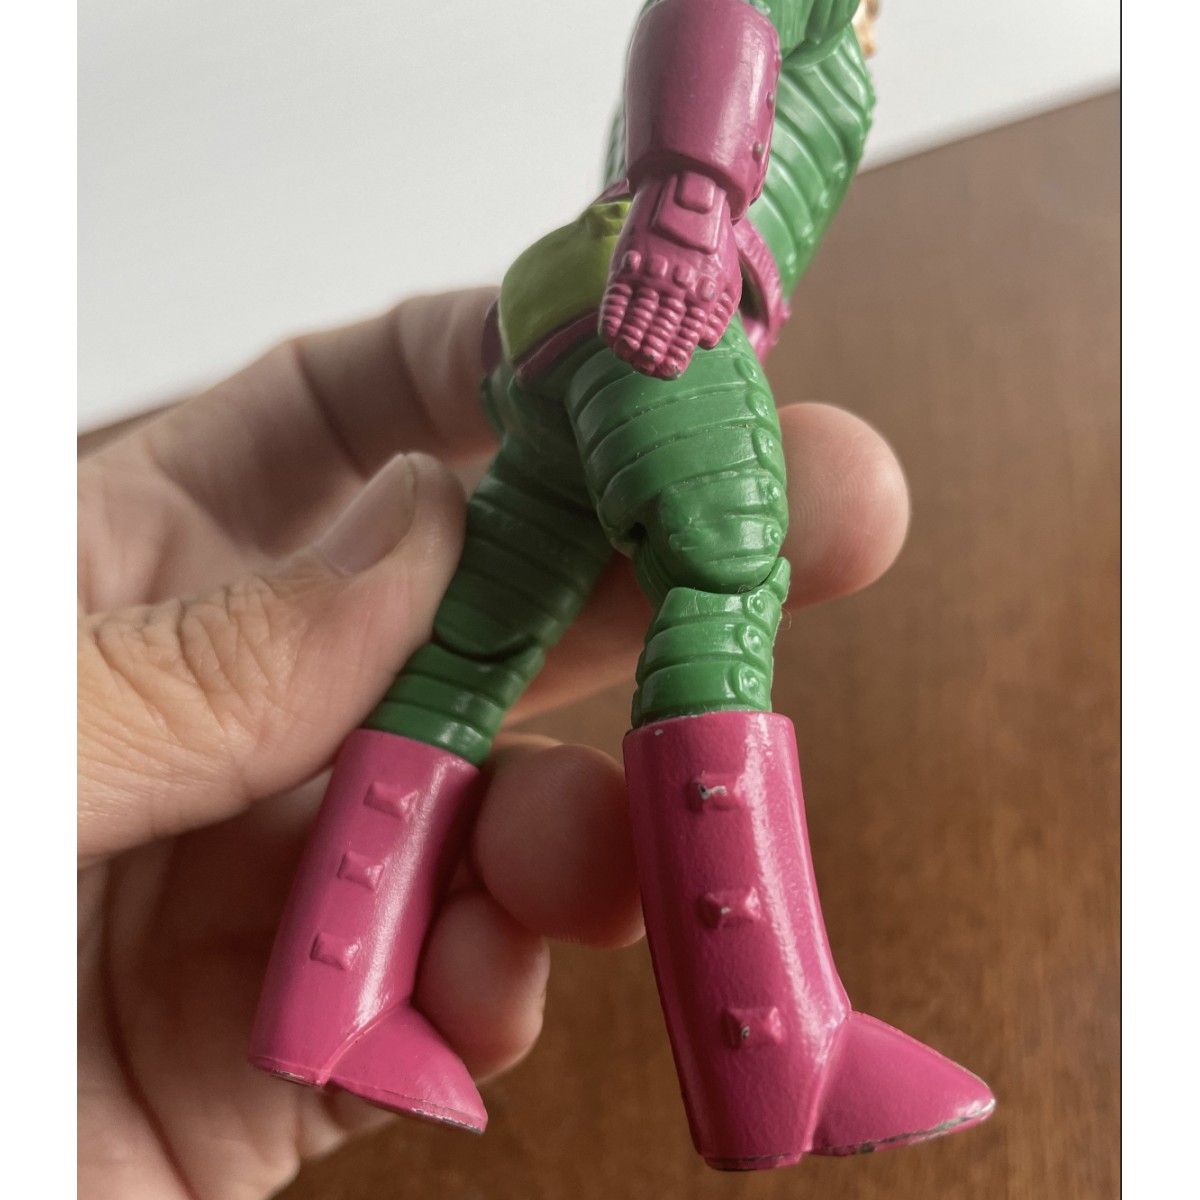 Vintage Lex Luthor 1985 kenner super man smallville DC comics super Hero vilain figurine d’action toys kids collectible green armure